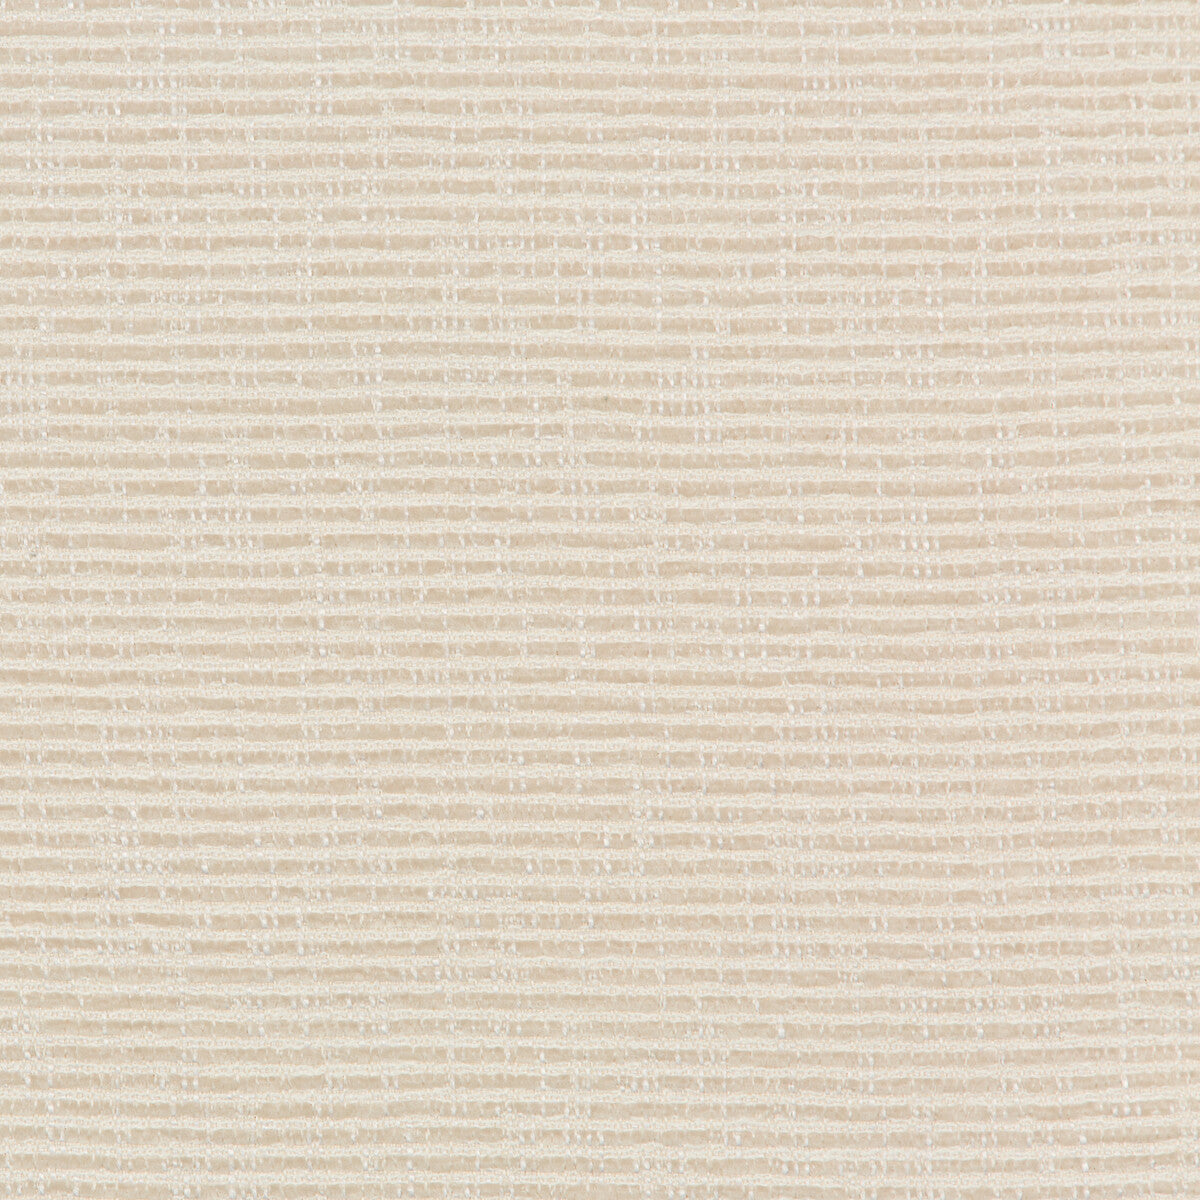 Kravet Smart fabric in 35940-1 color - pattern 35940.1.0 - by Kravet Smart in the Performance Kravetarmor collection